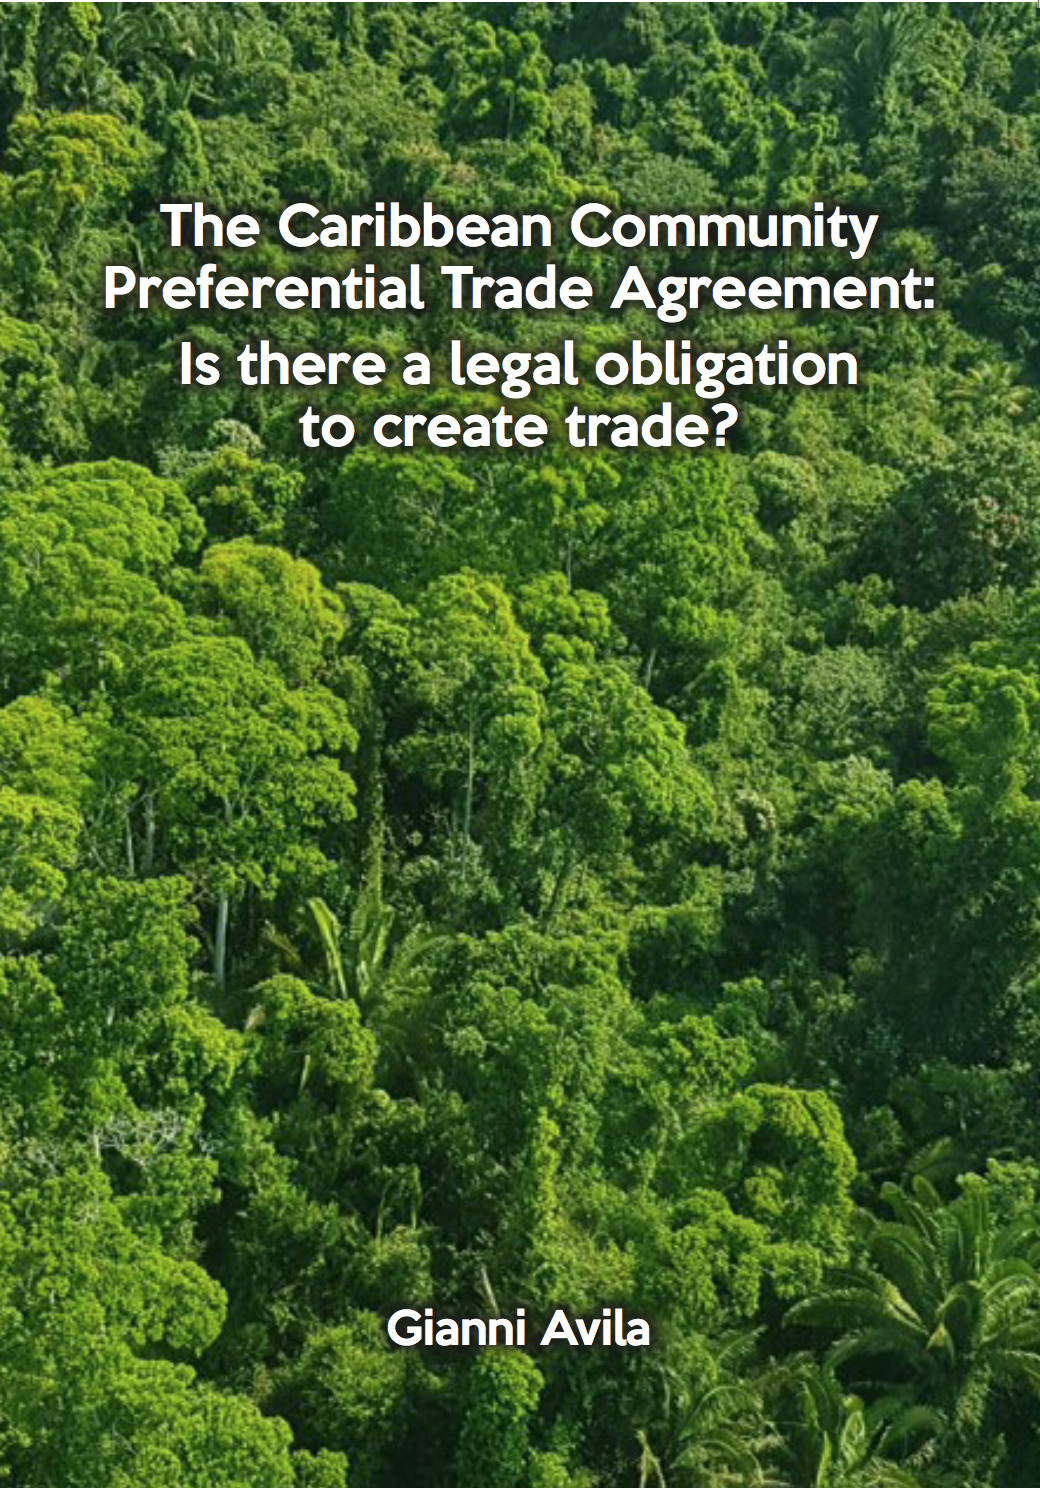 avila_giani_the_carebbean_community_preferential_trade_agreement.png